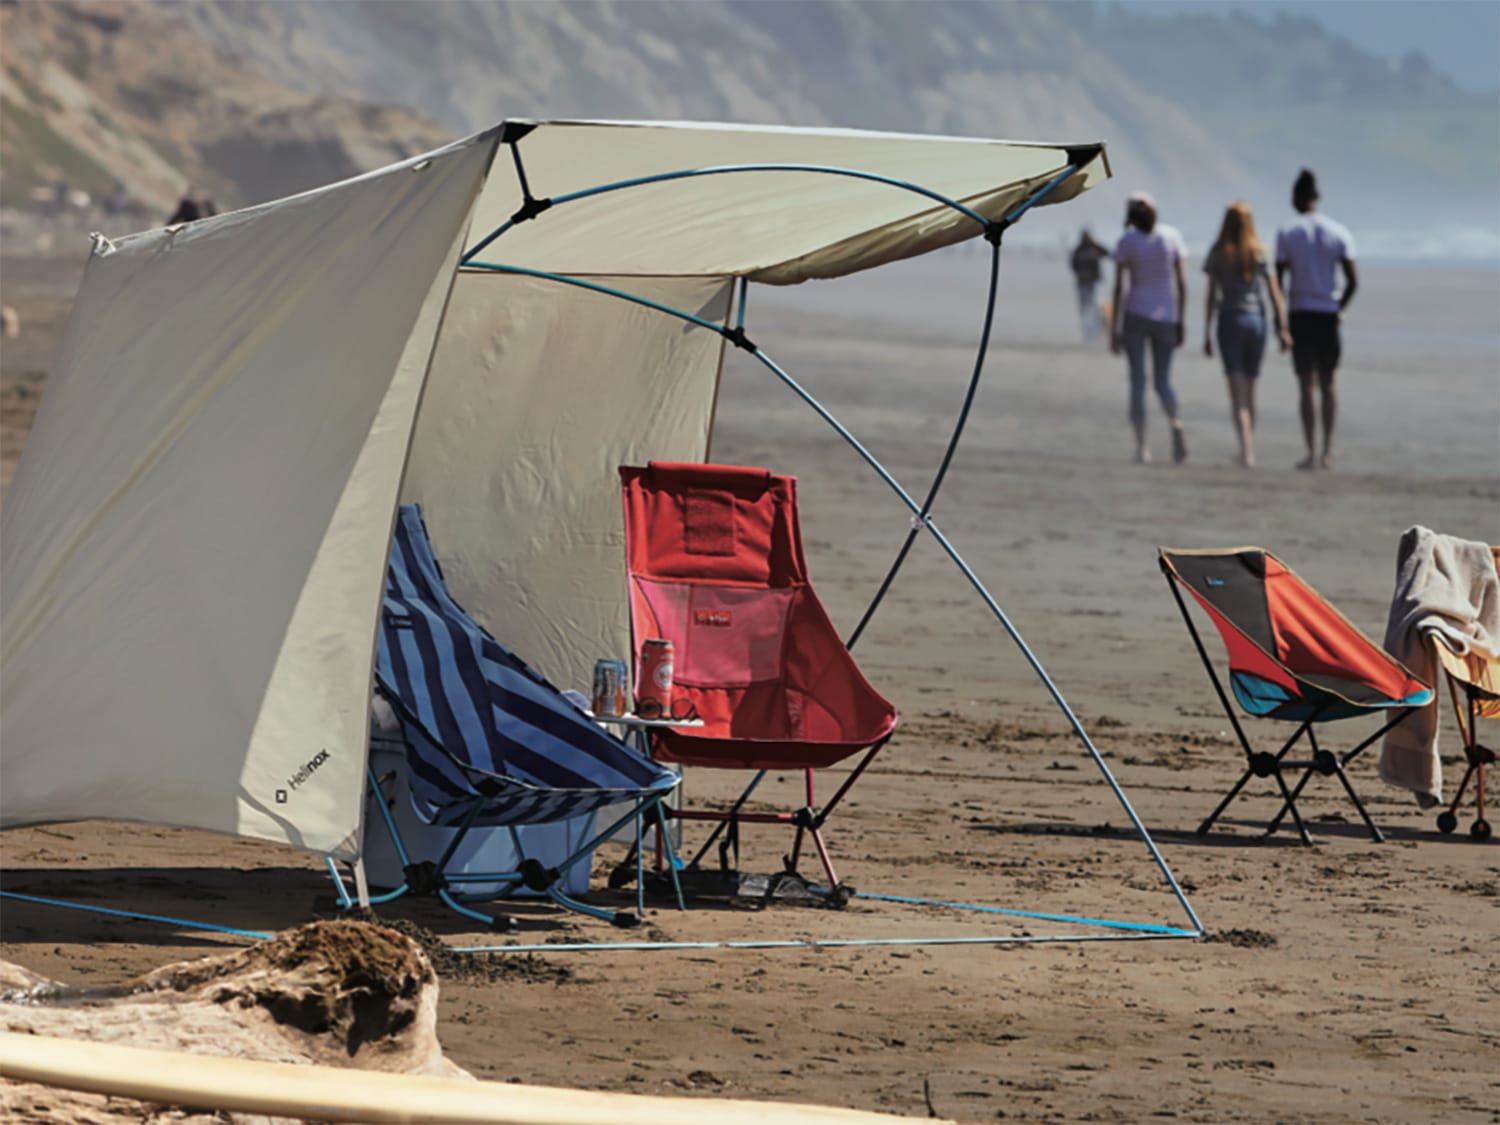 The Helinox Royal Box shade tent set up on a beach.